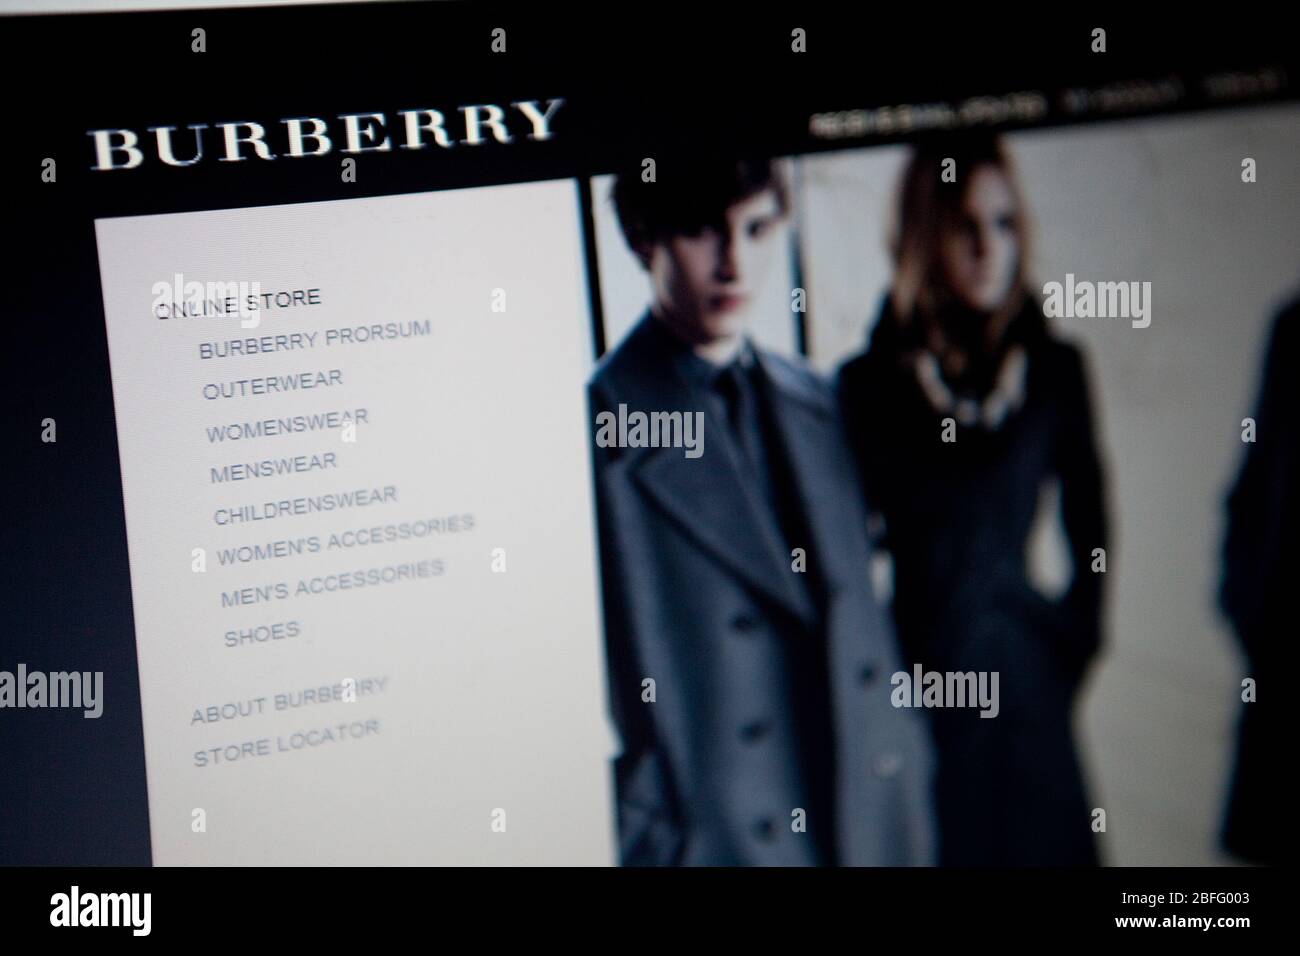 burberry online store